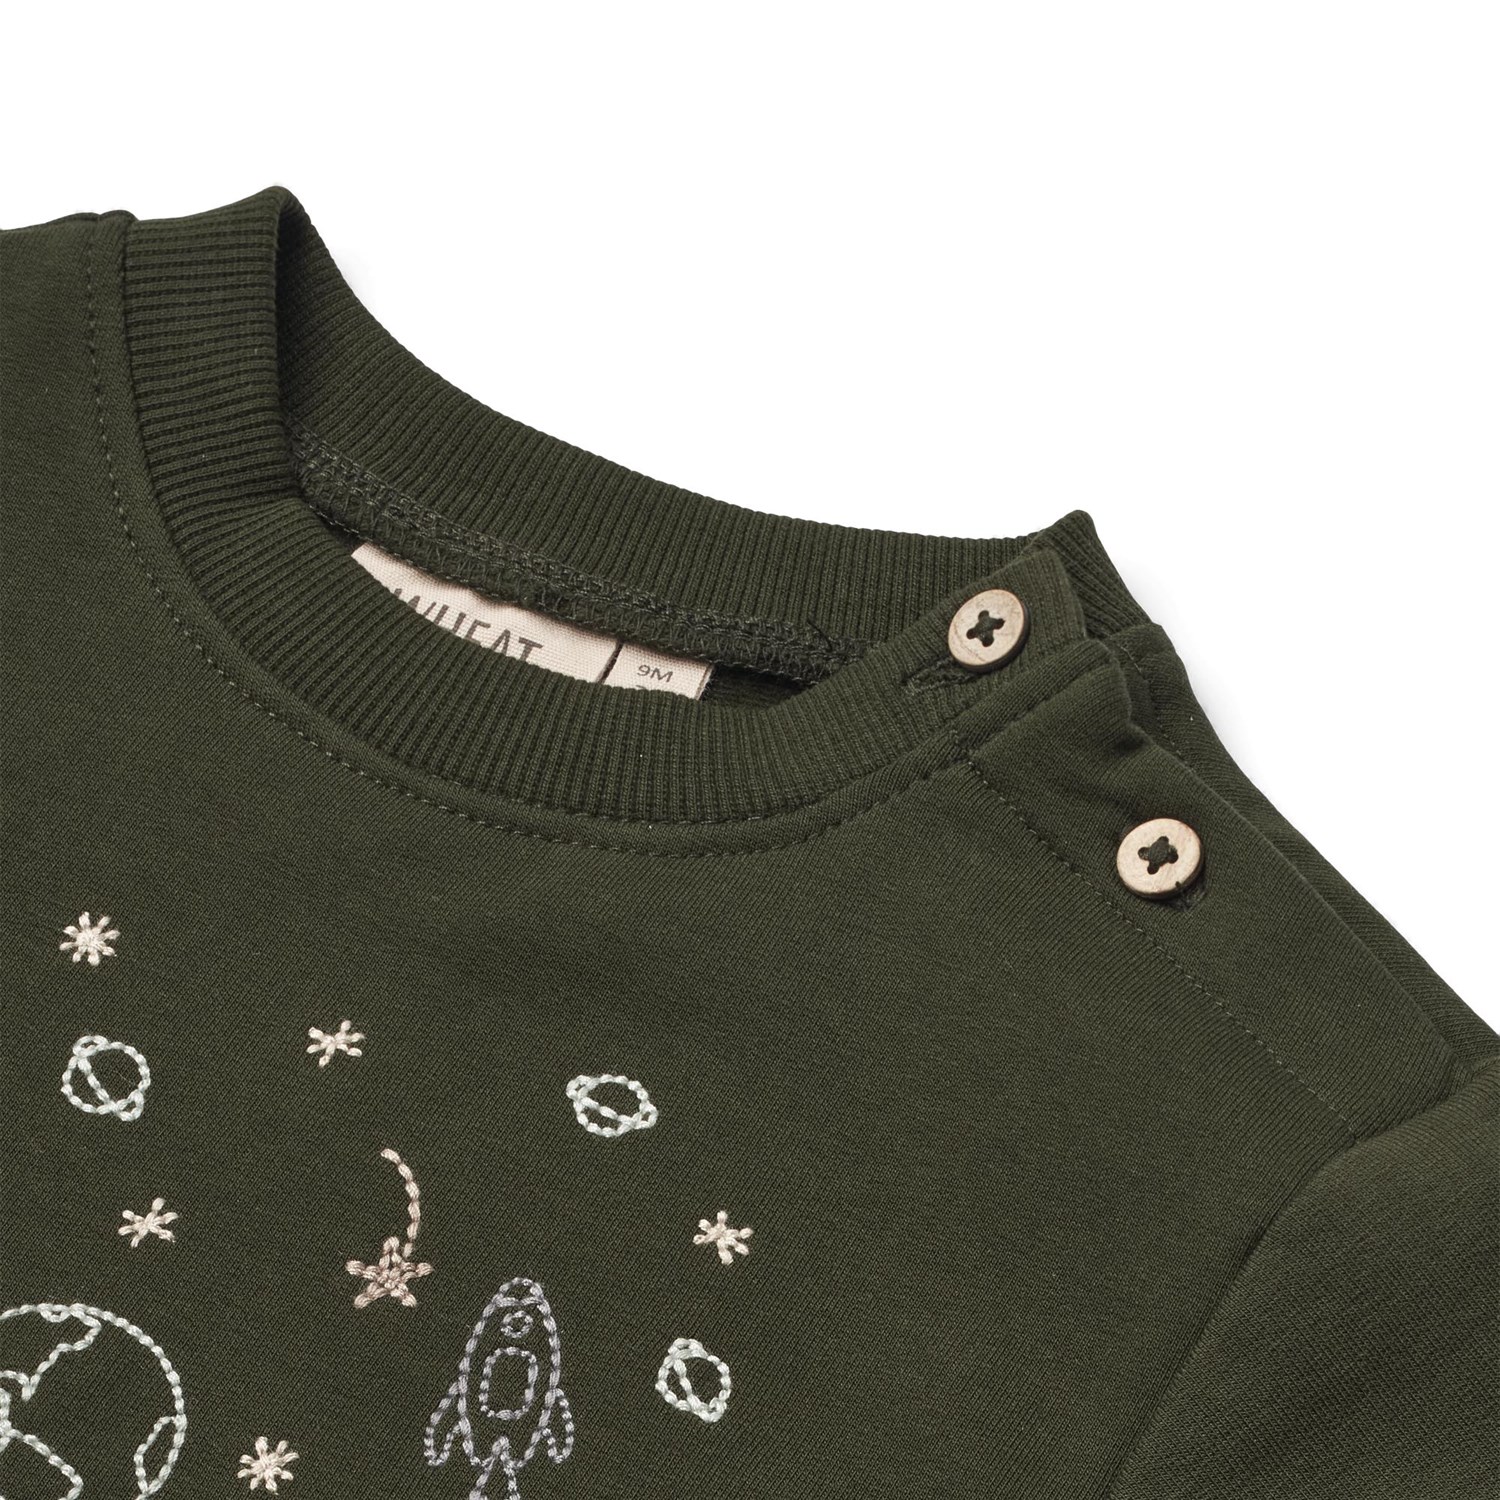 Wheat Deep sweatshirt - Space forest